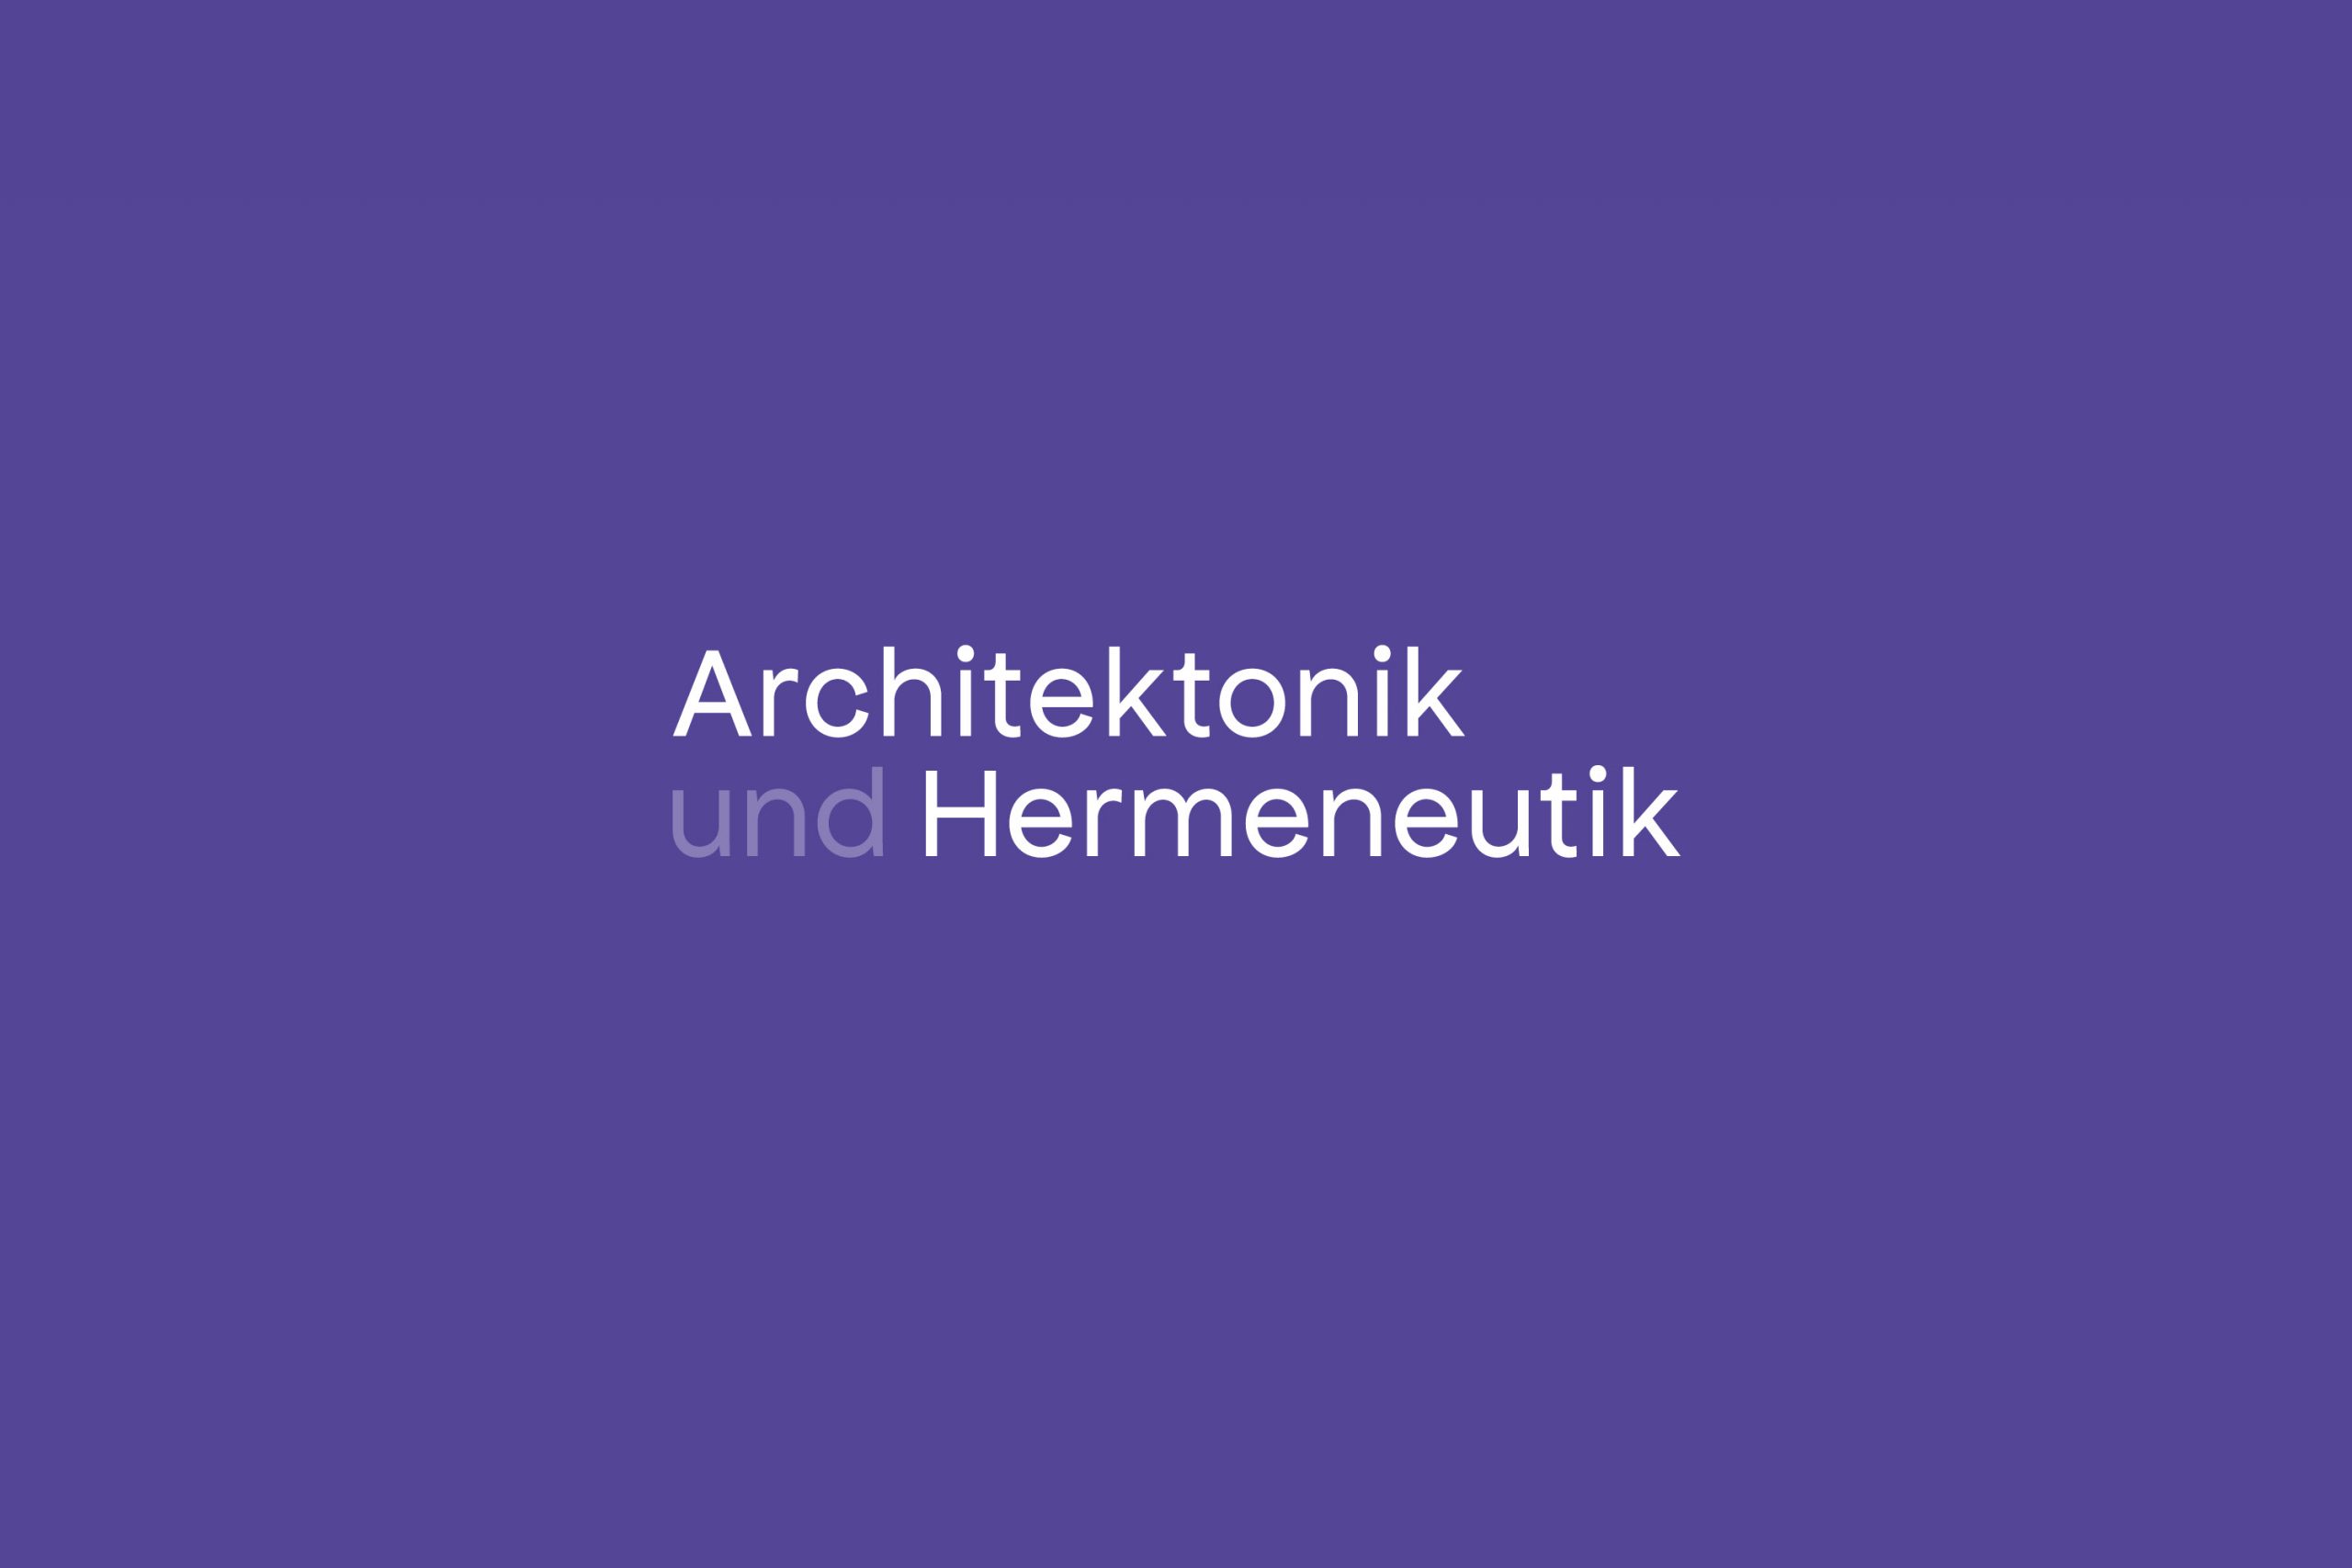 Architektonik und Hermeneutik